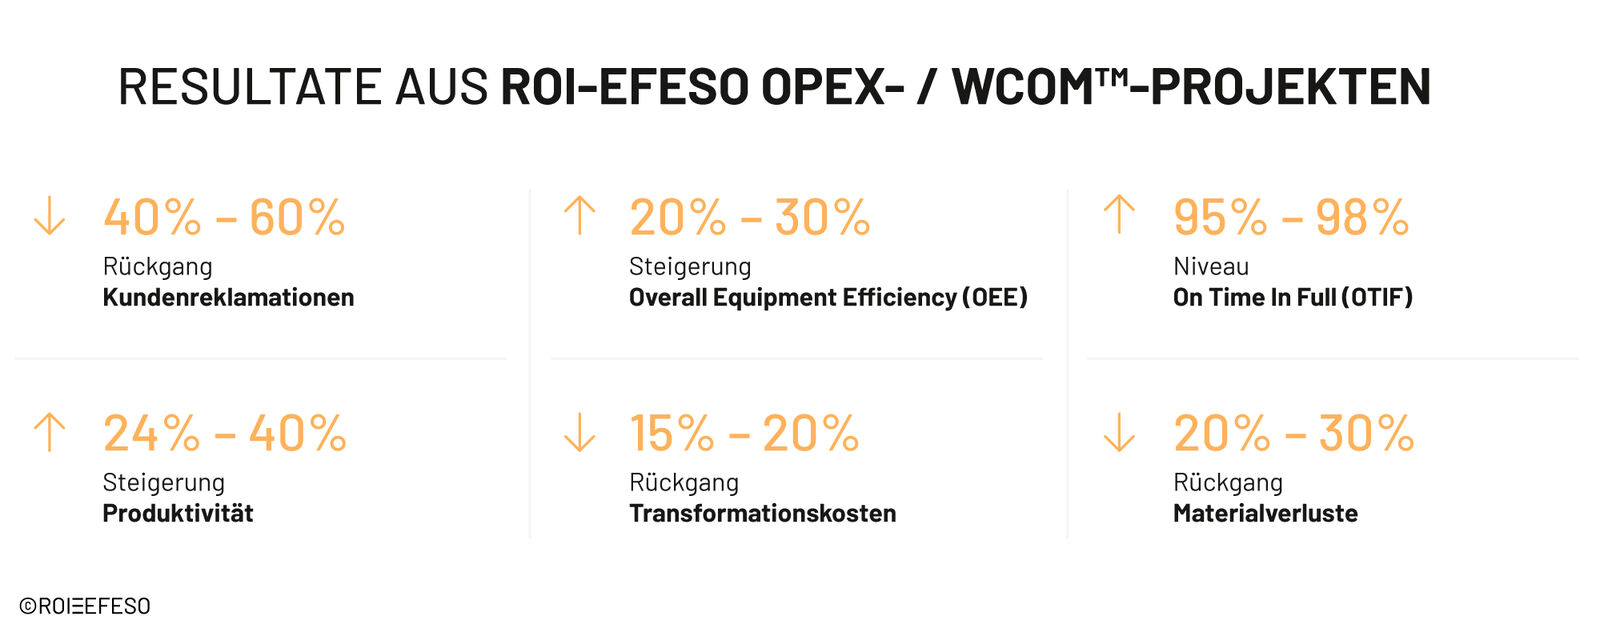 Resultate aus ROI-EFESO OPEX / WCOM™-Projekten 